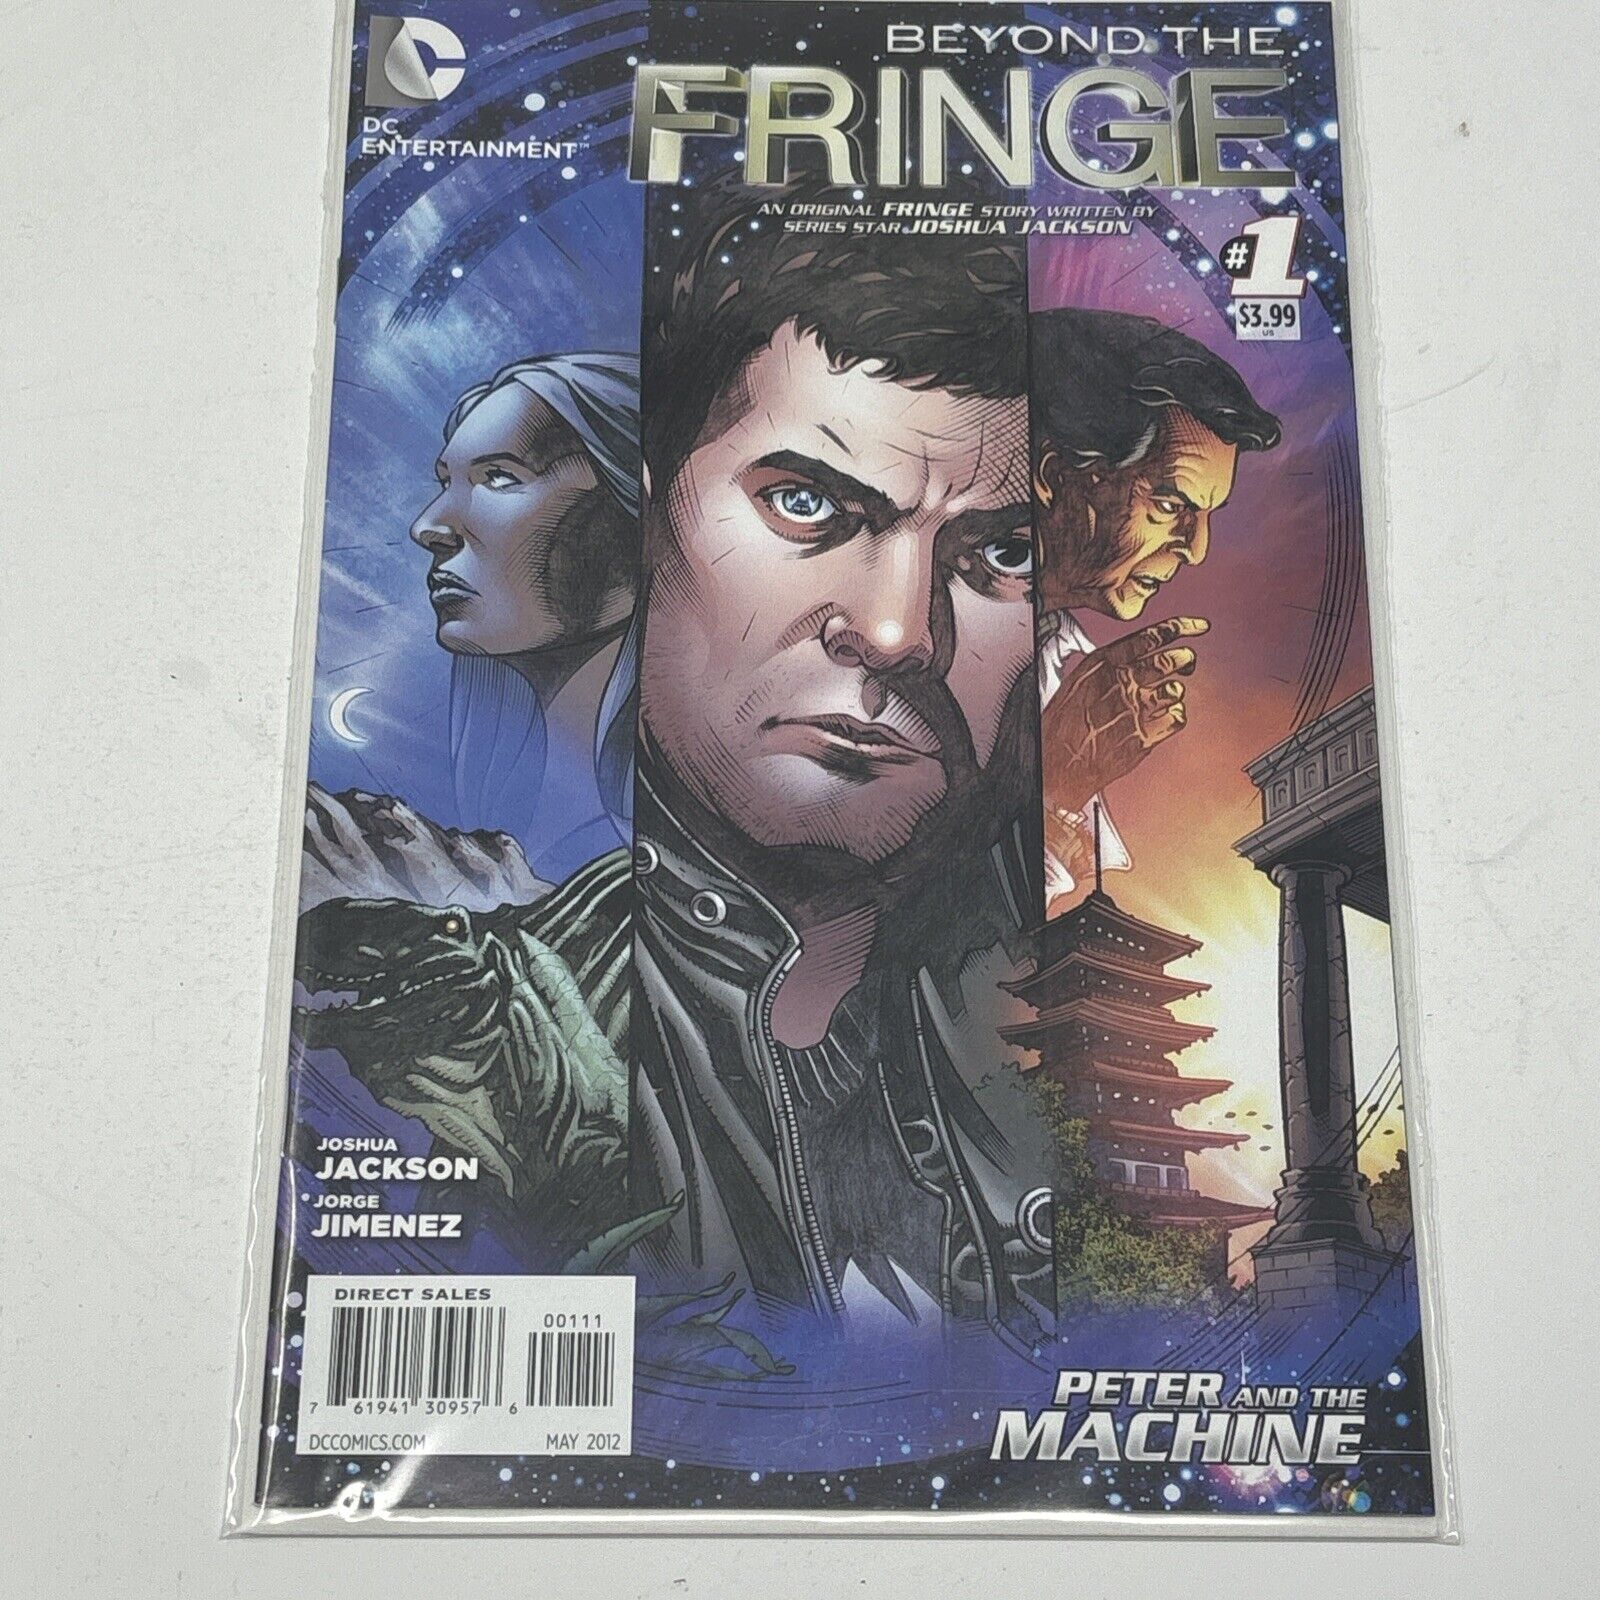 Fringe #1 Beyond the Fringe (DC Comics November 2012)